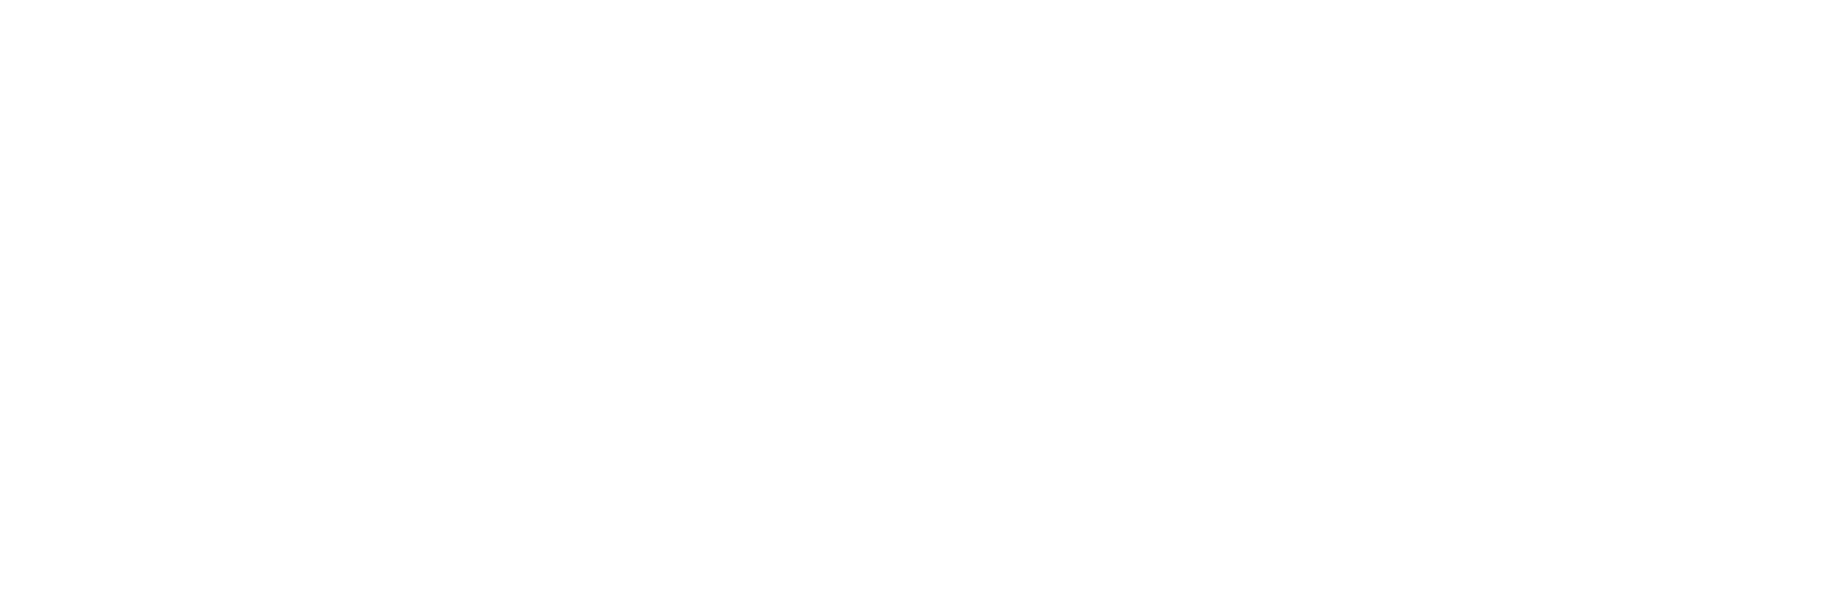 40 Year Logos w